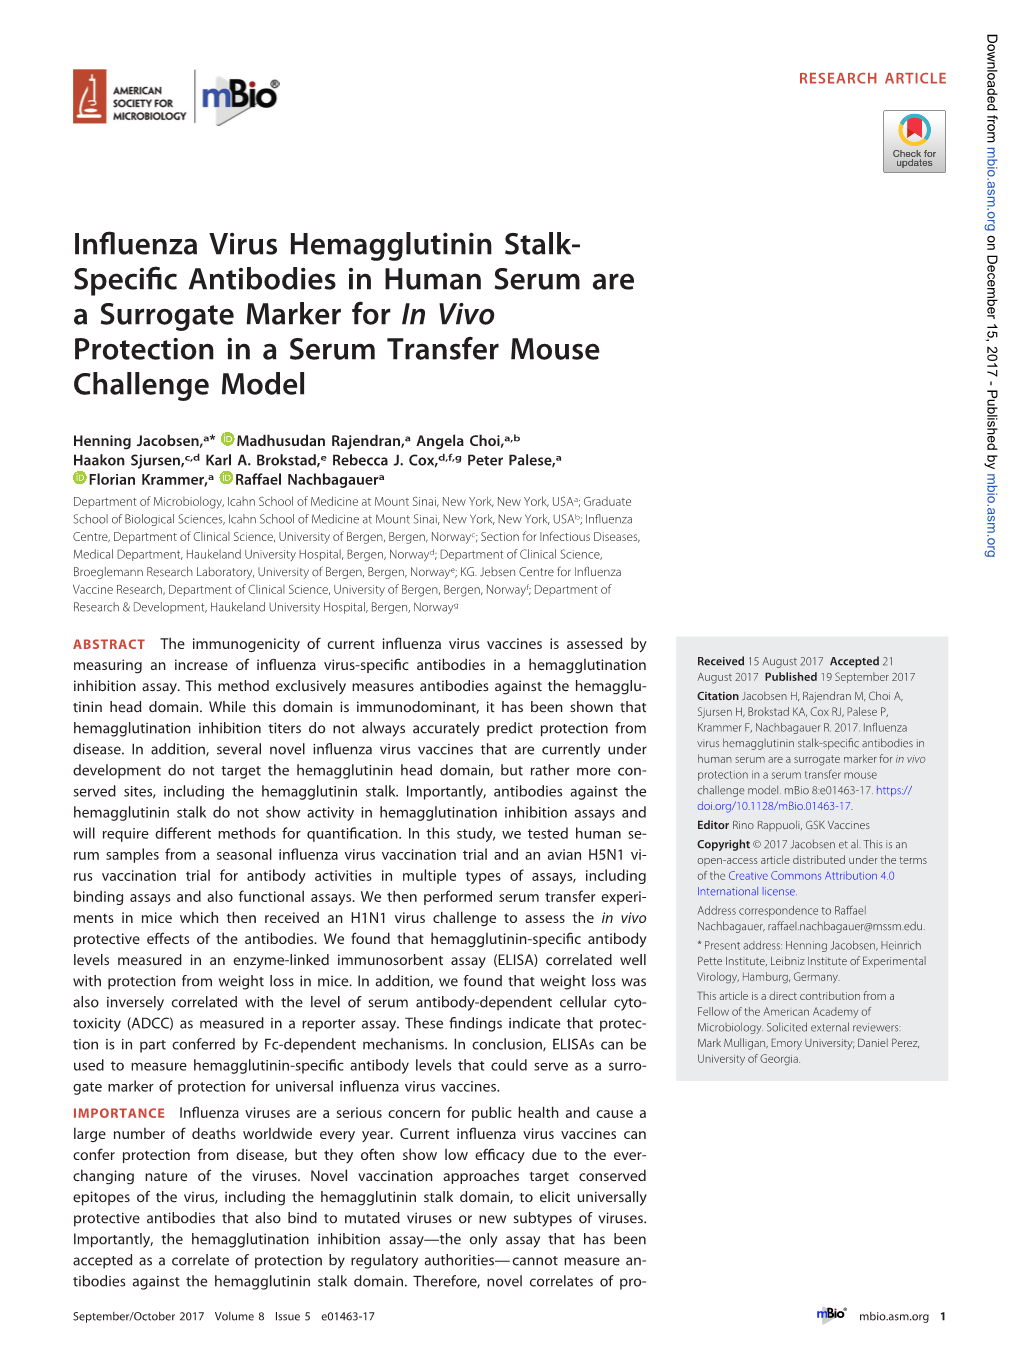 Influenza Virus Hemagglutinin Stalk-Specific Antibodies in Human